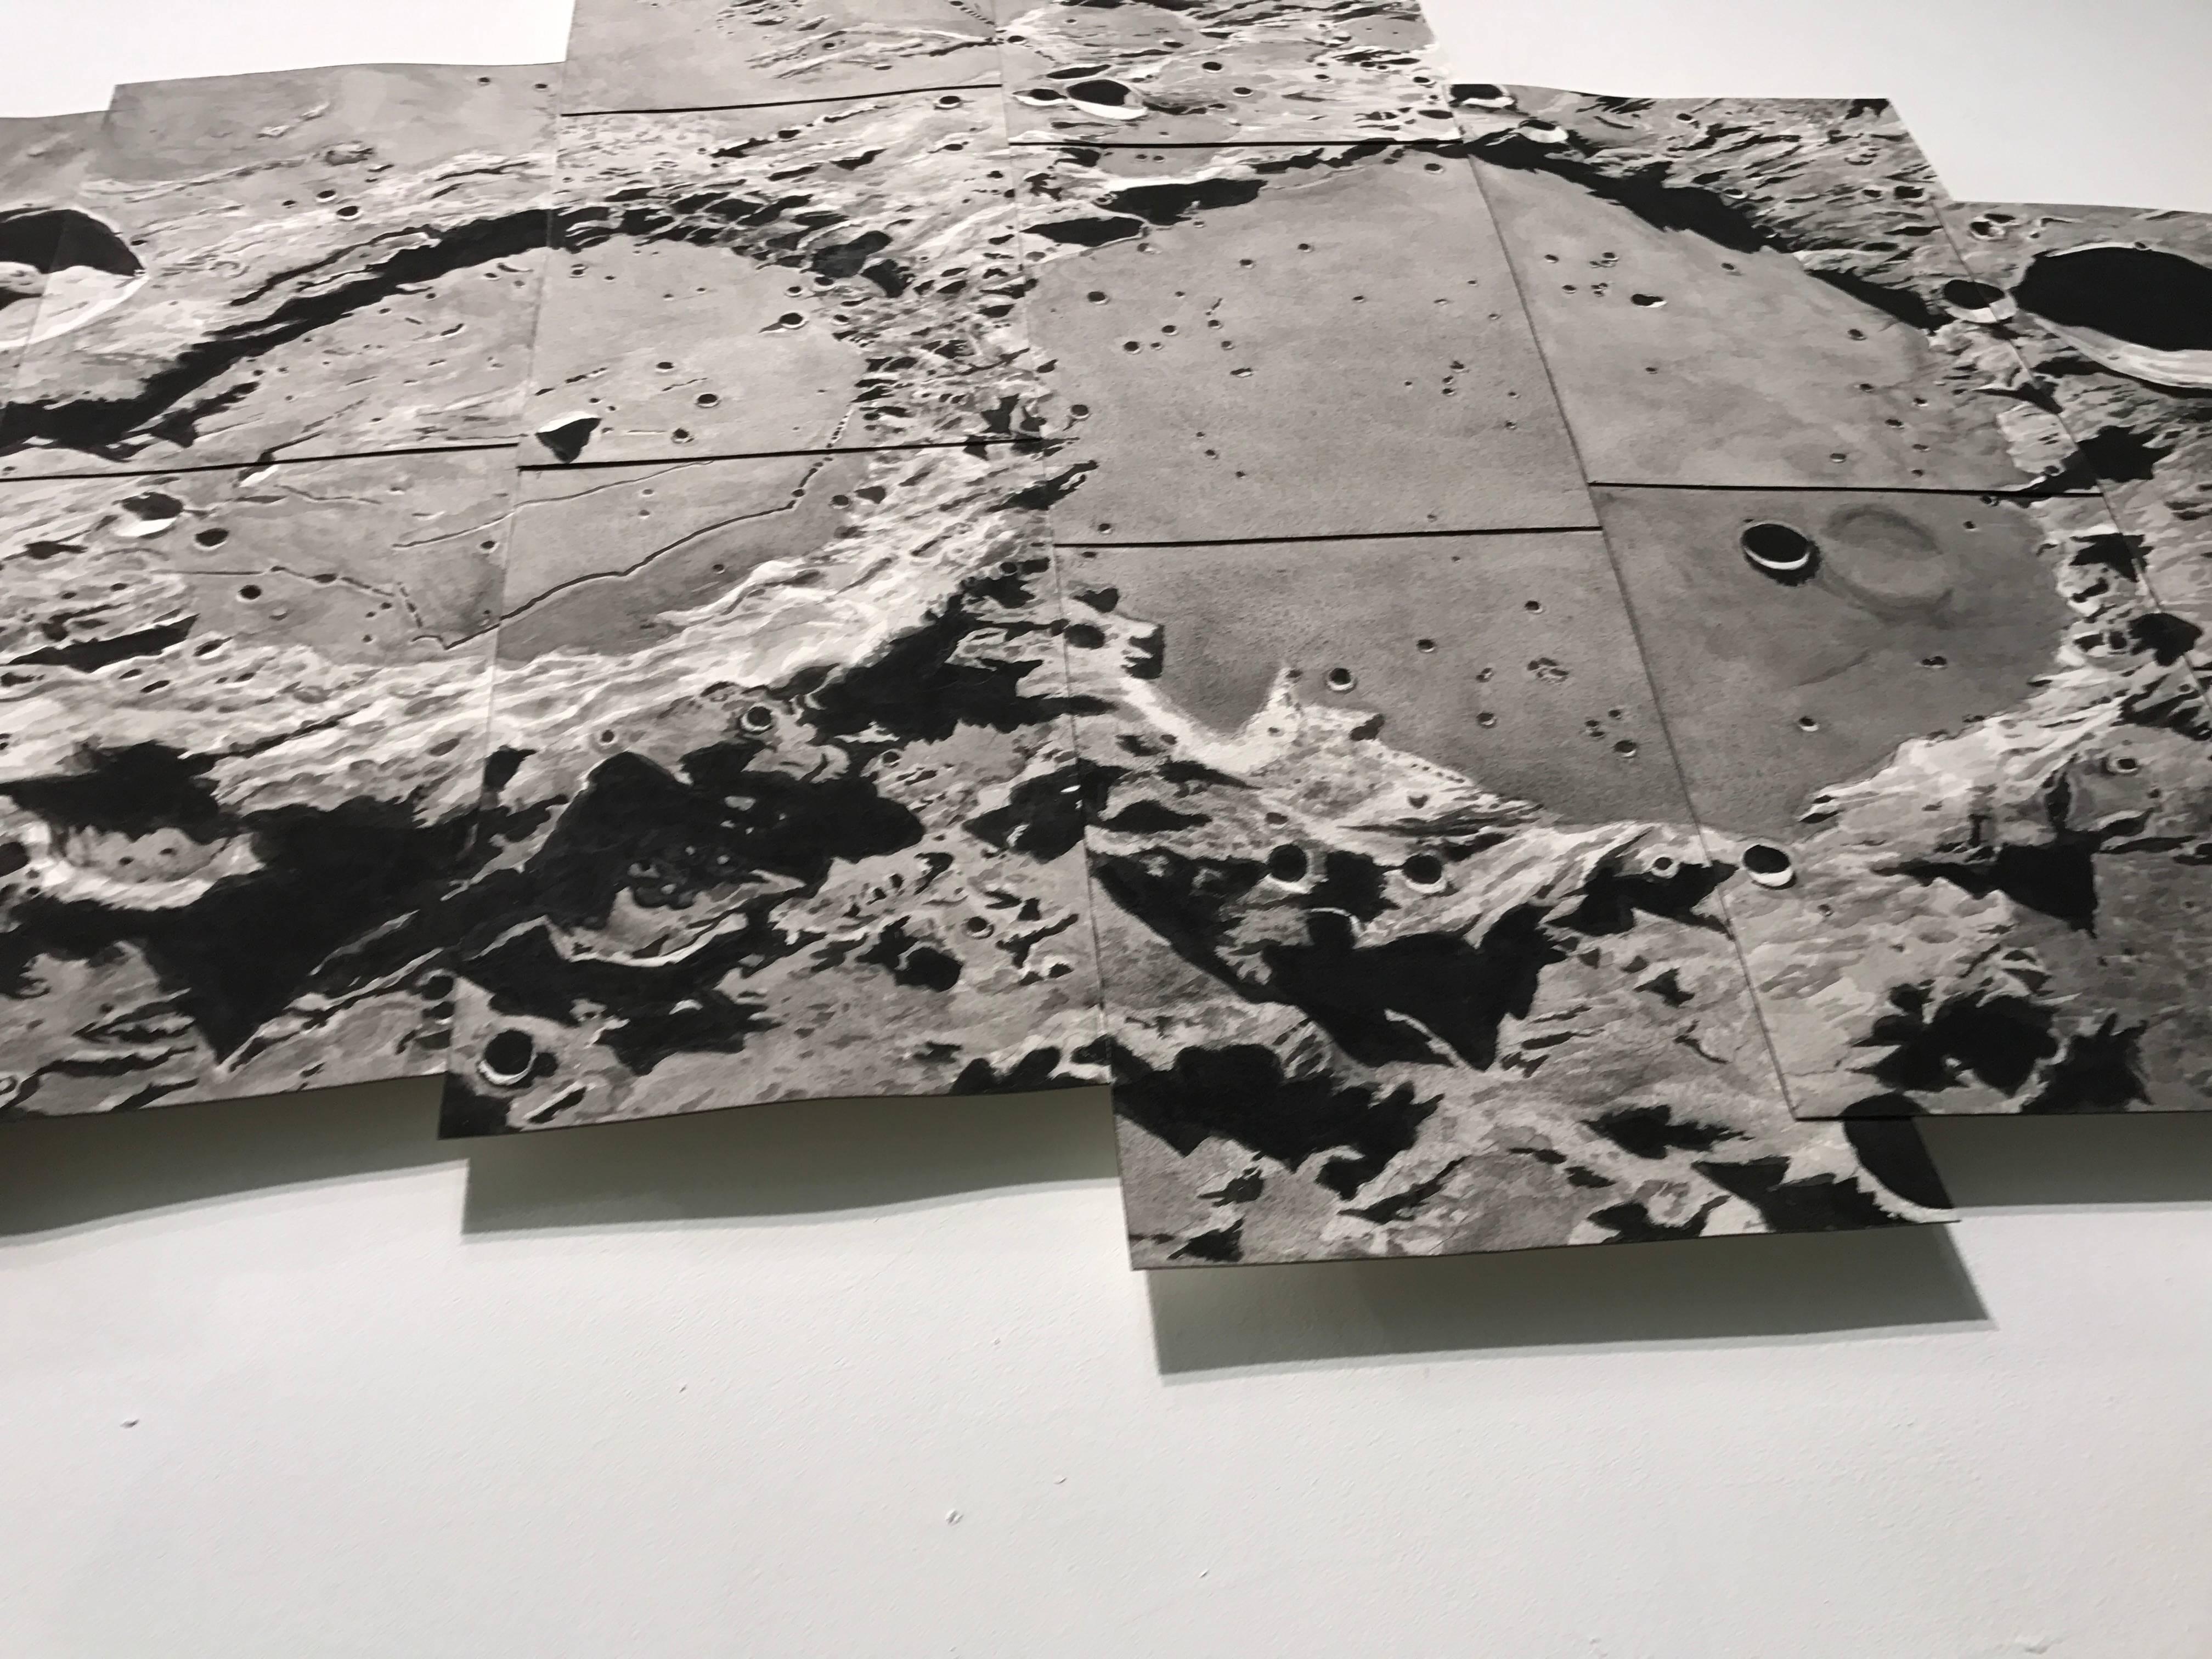 Lunar Crater-Krasterkette im Angebot 2